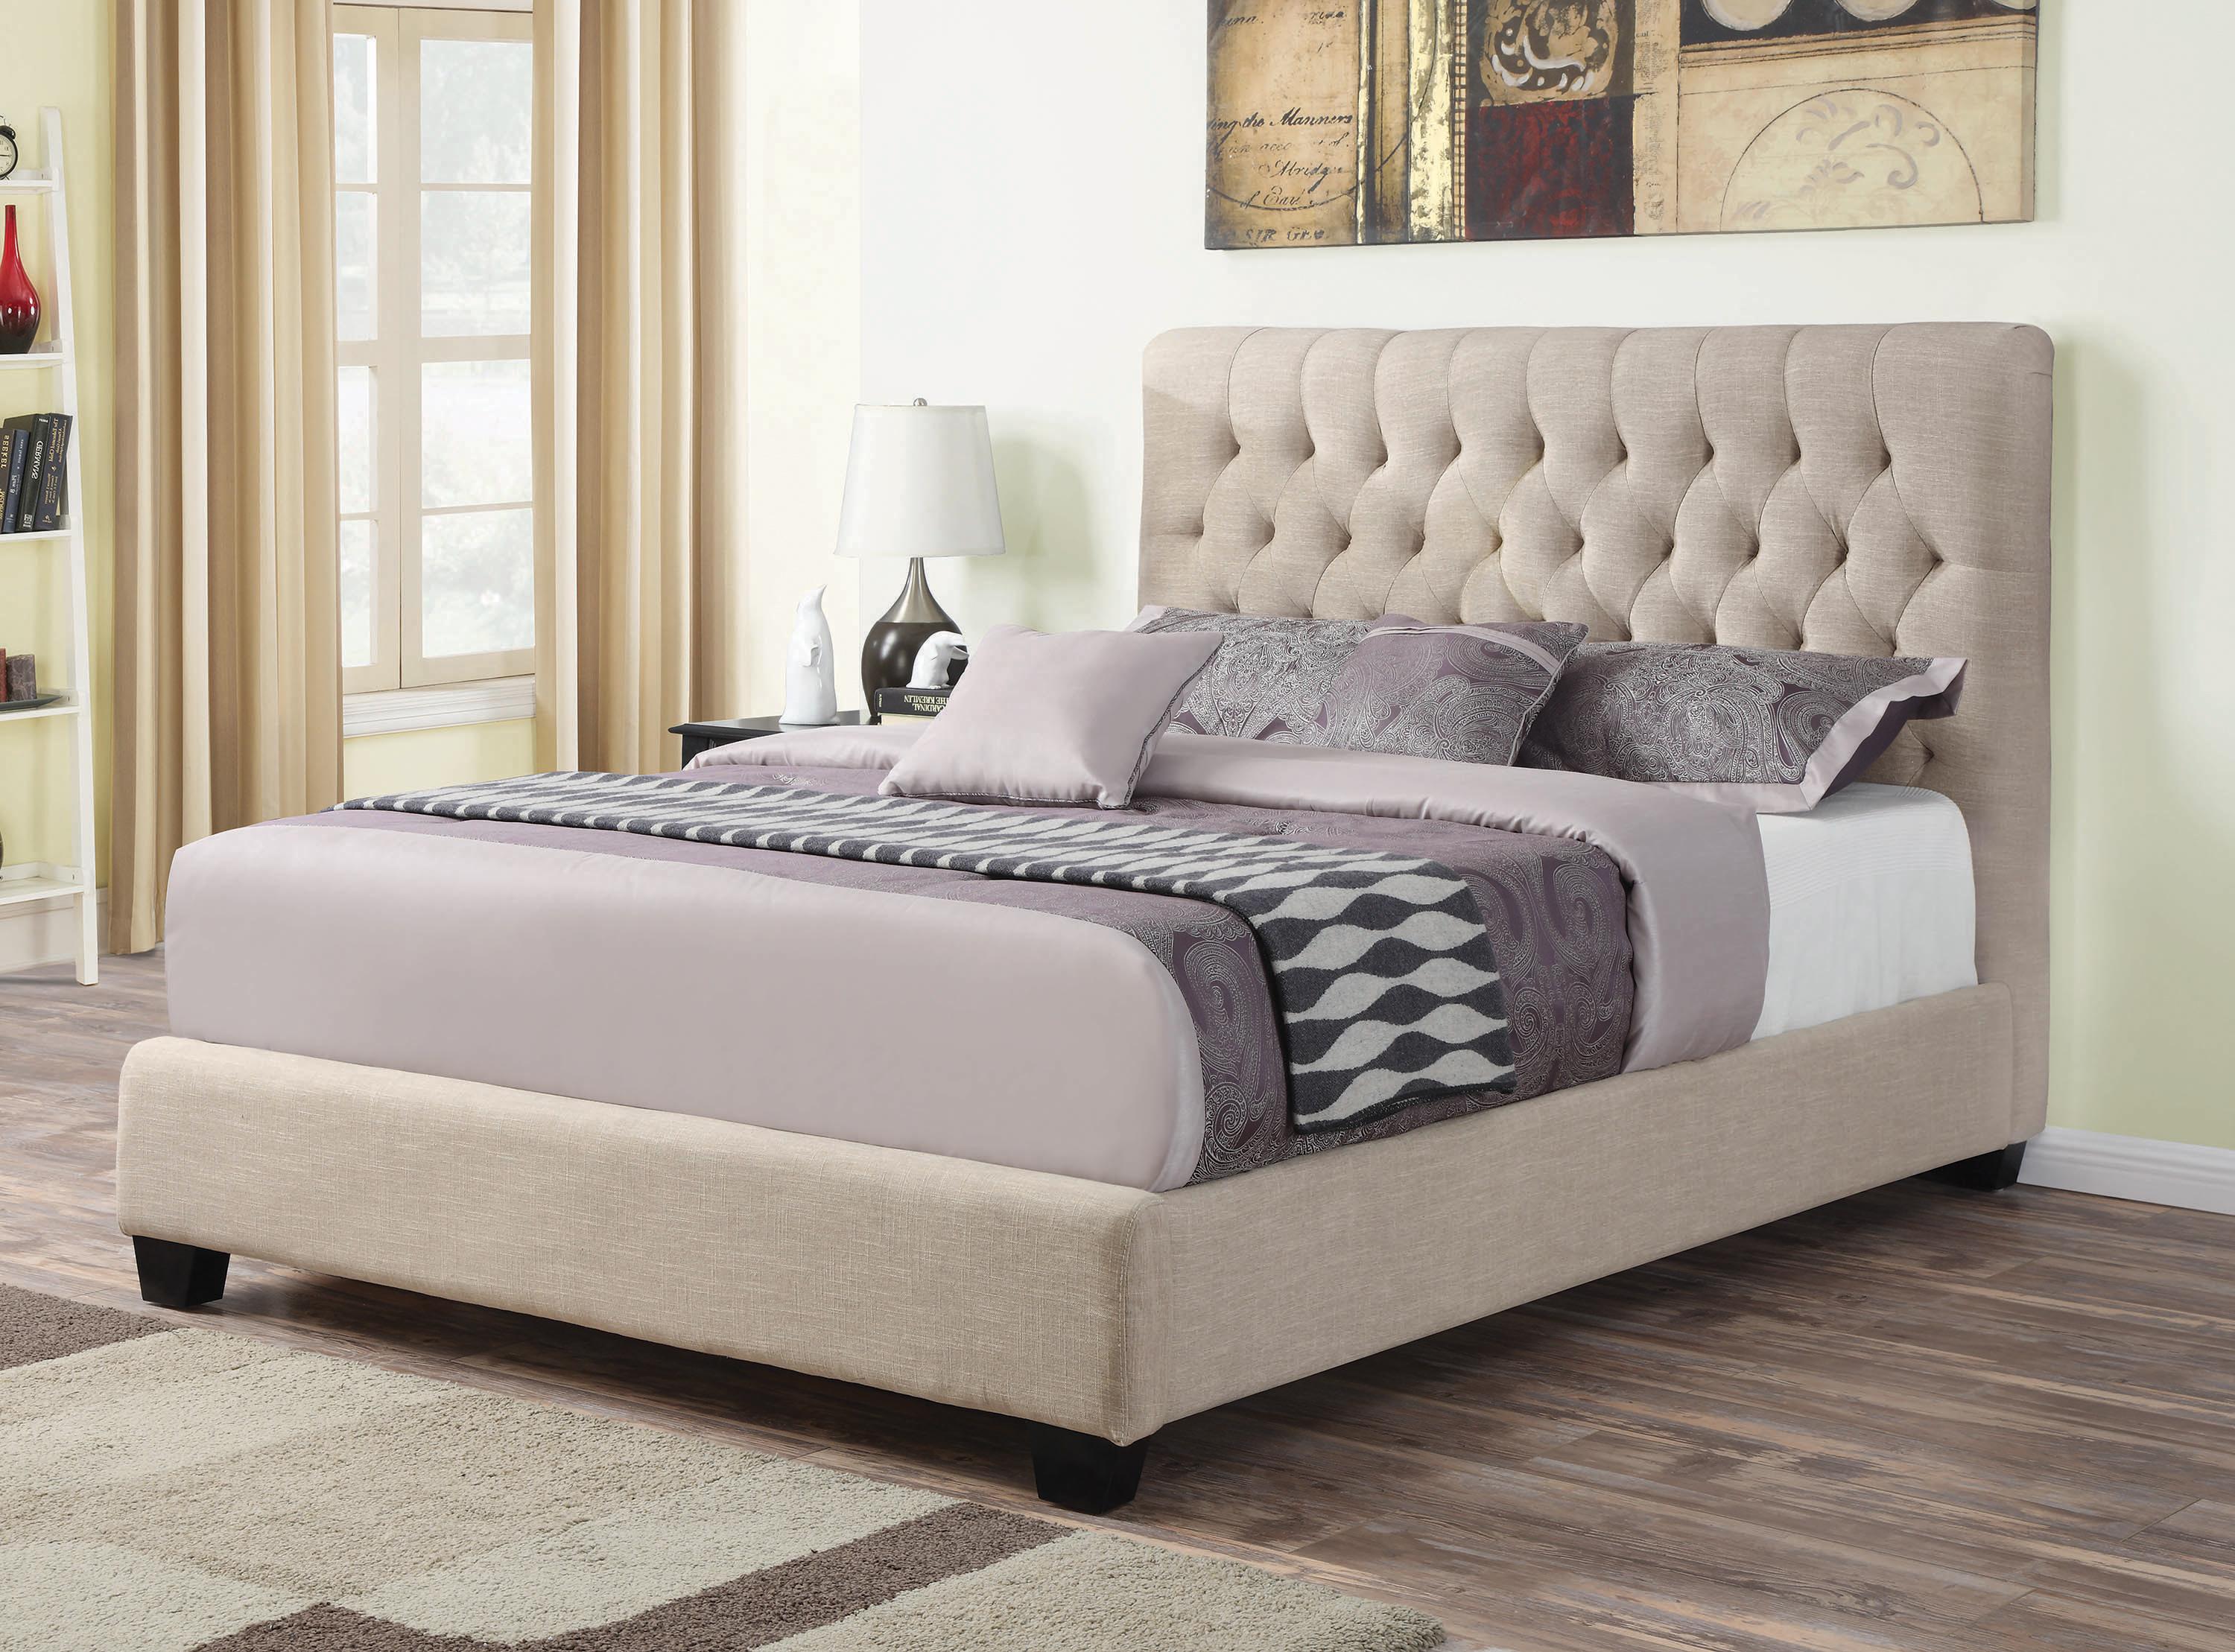 

    
Contemporary Oatmeal Fabric Upholstery Full Bed Coaster 300007F Chloe
